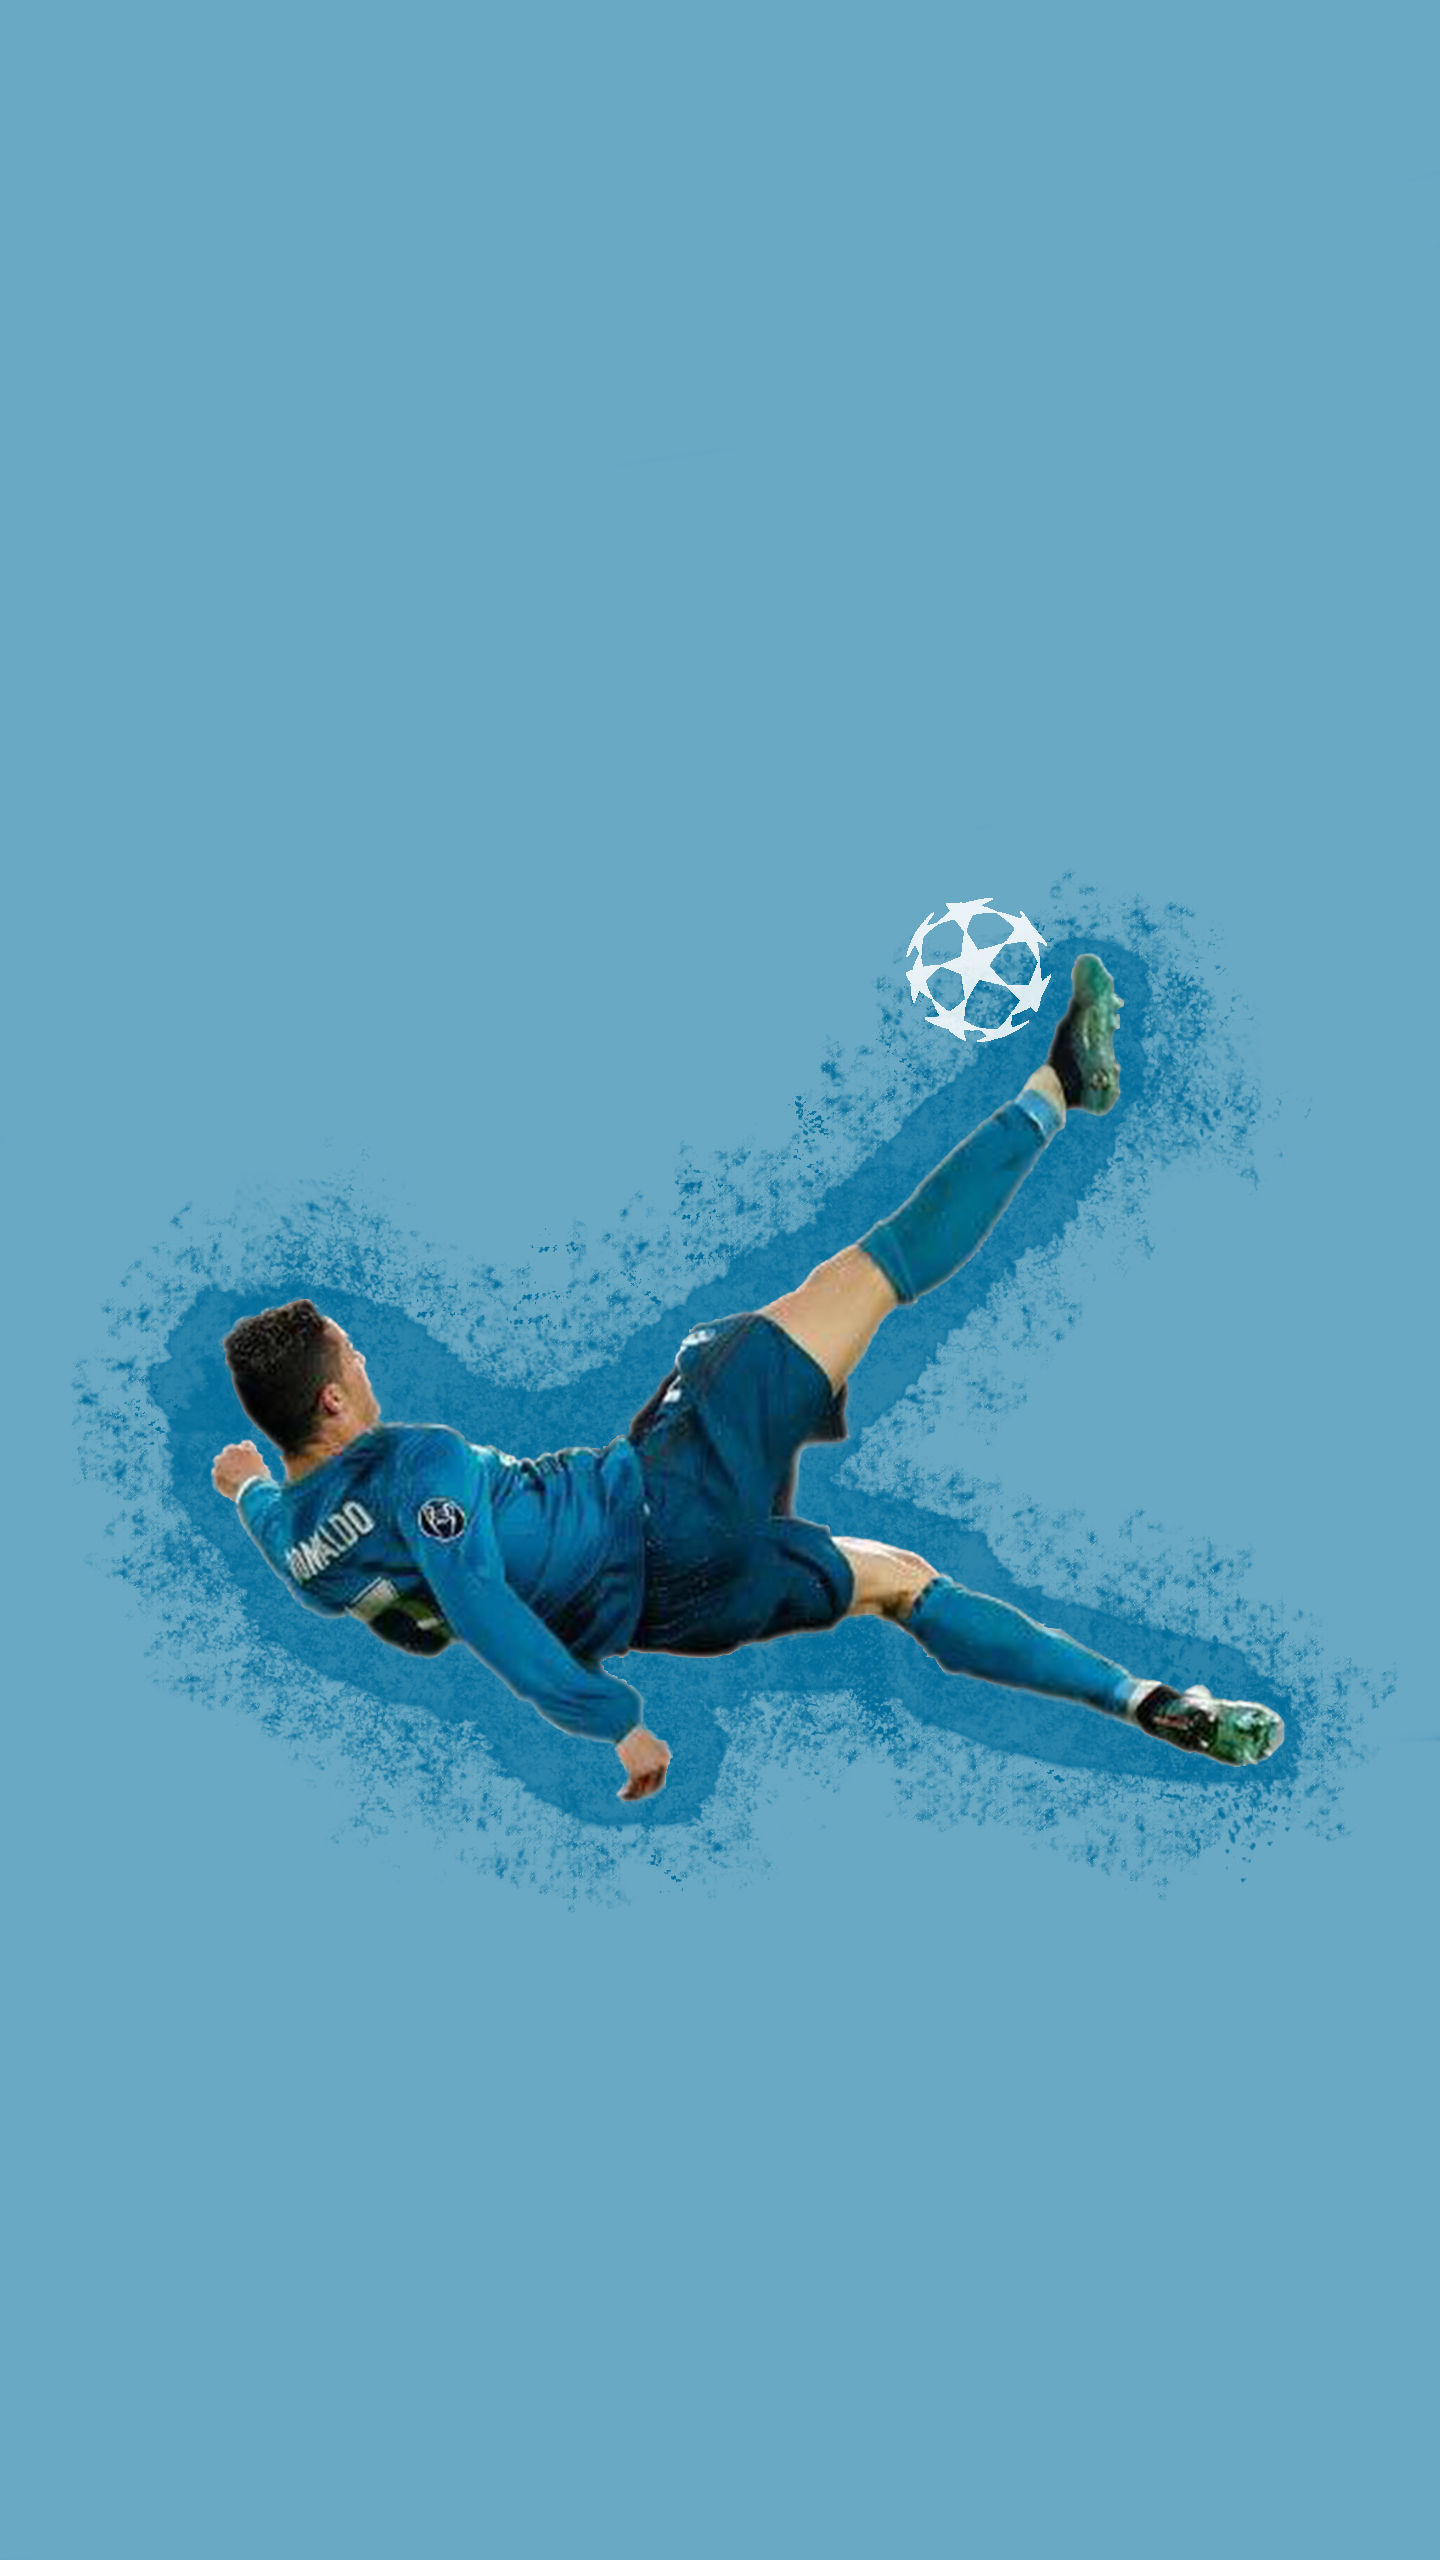 Cristiano overhead kick vs. Juve mobile wallpaper (1440x2560)